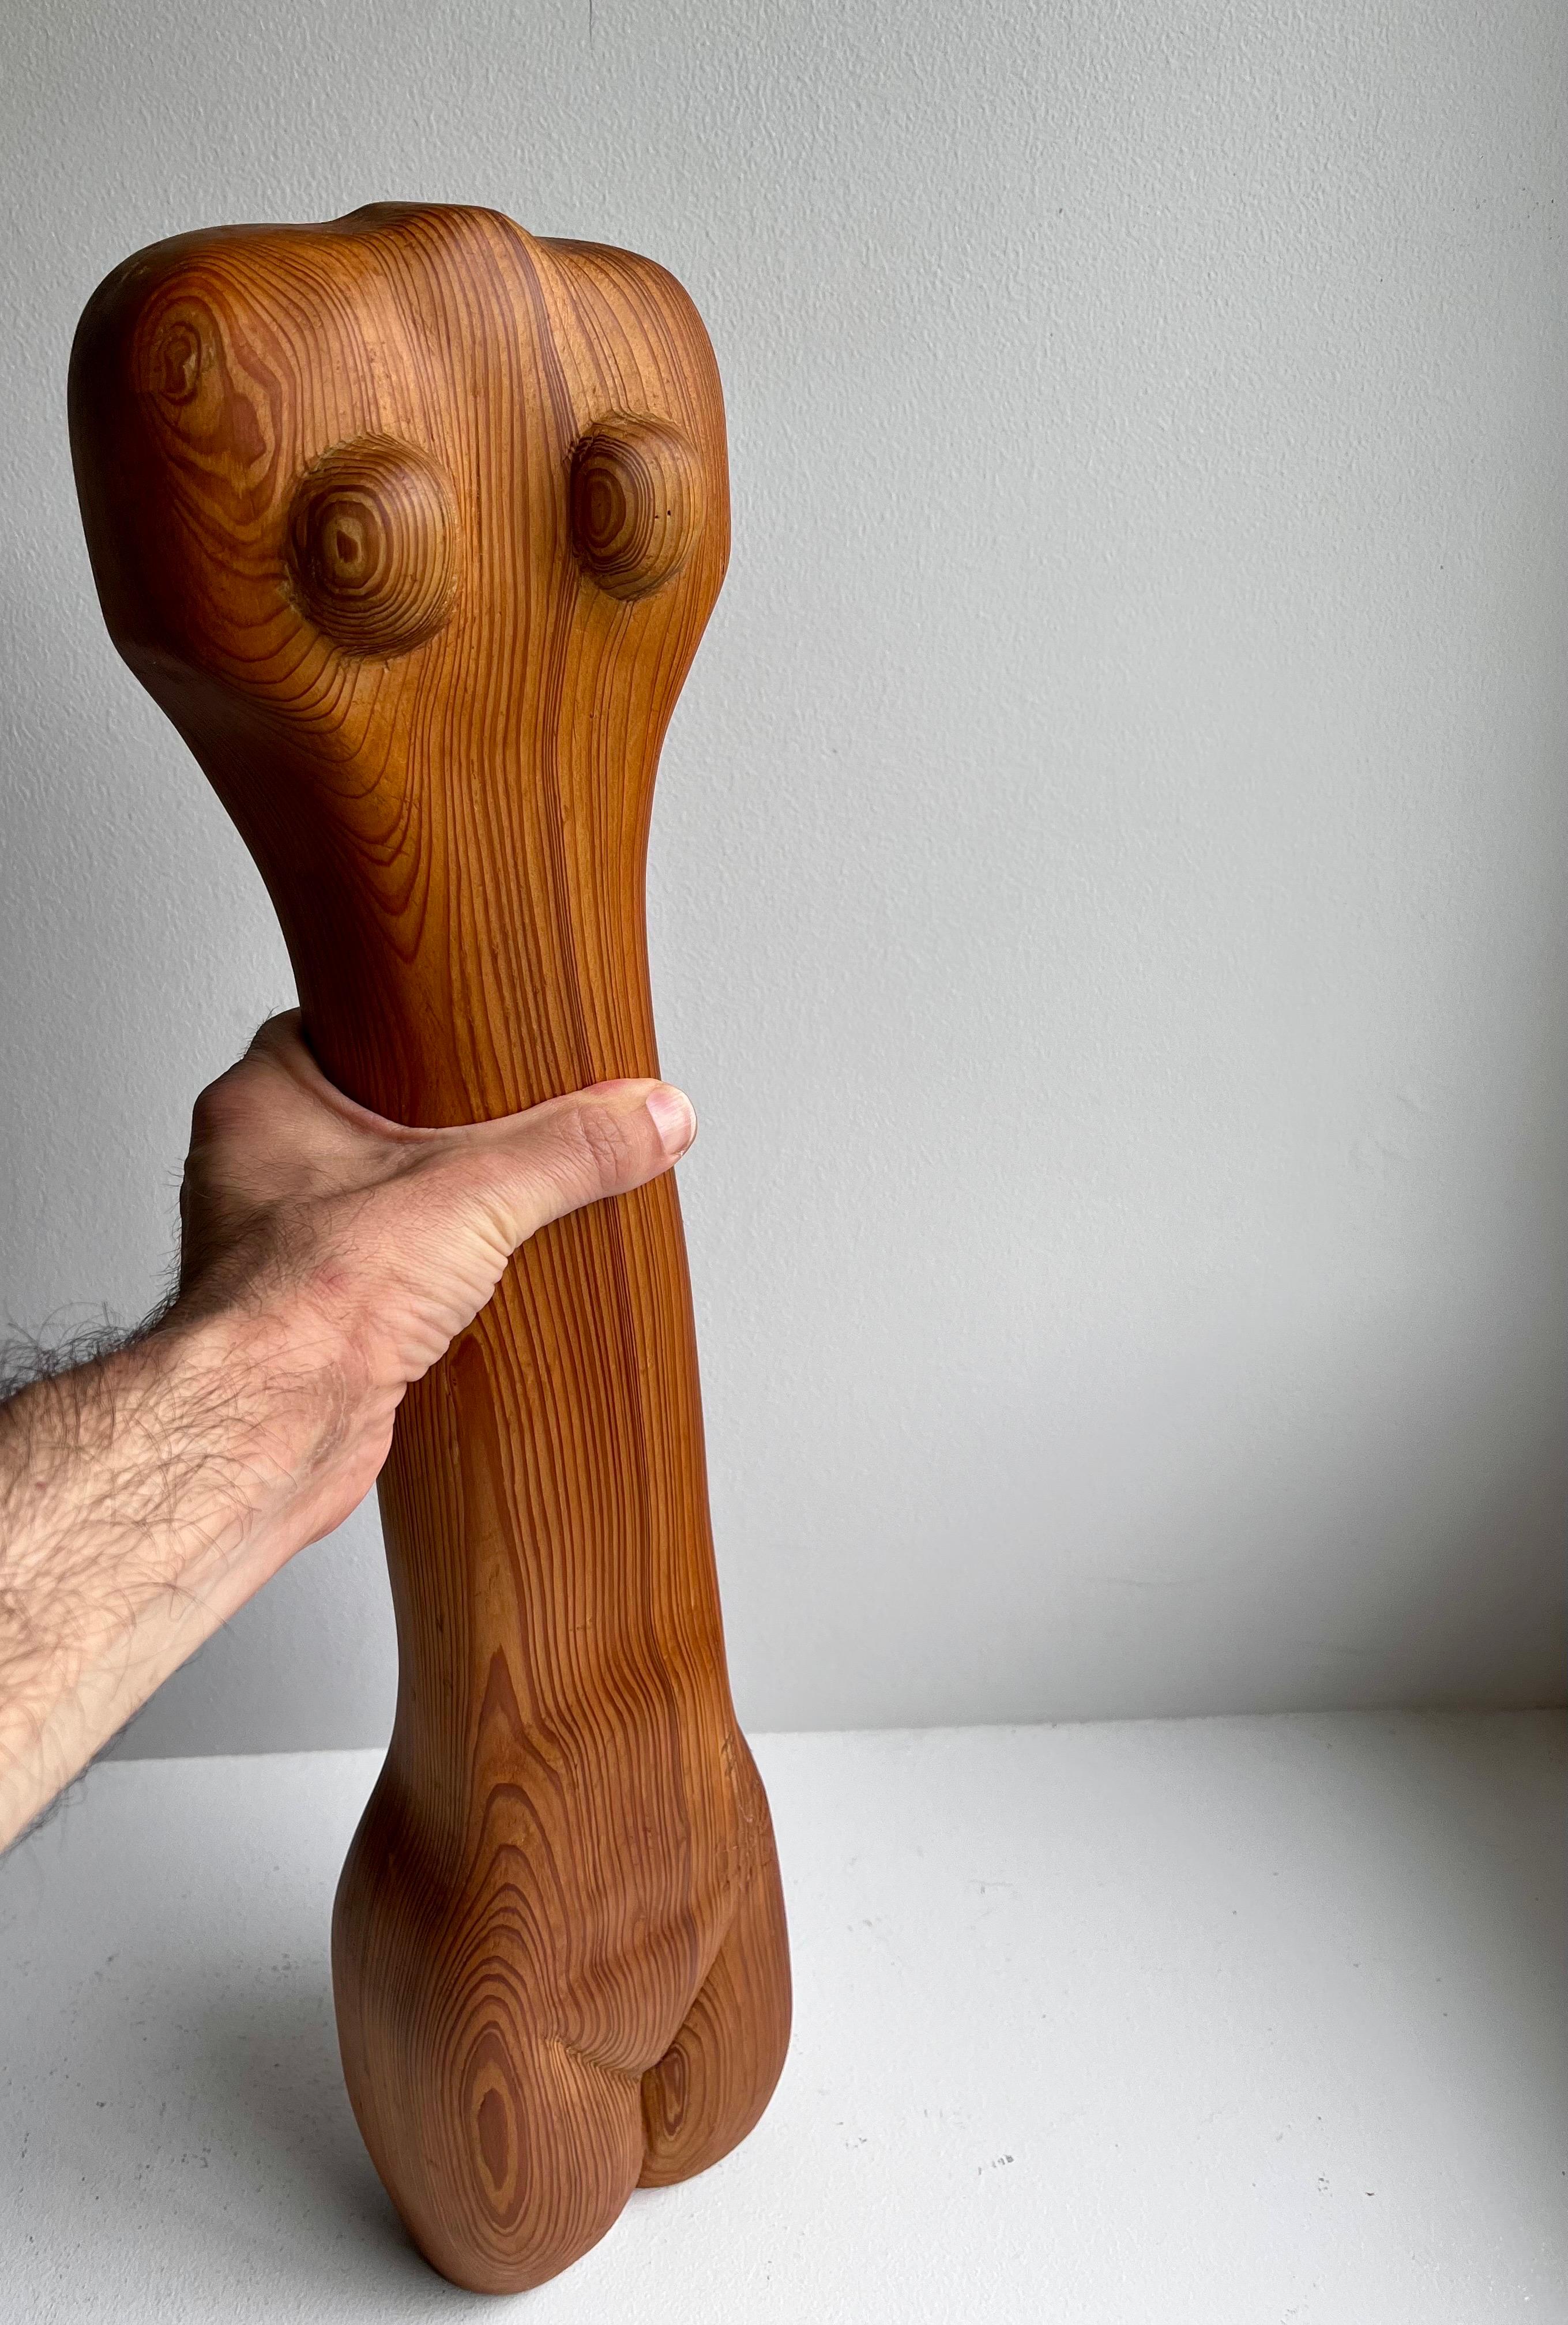 Primitive Modernist Wood Sculpture of Female Nude For Sale 5